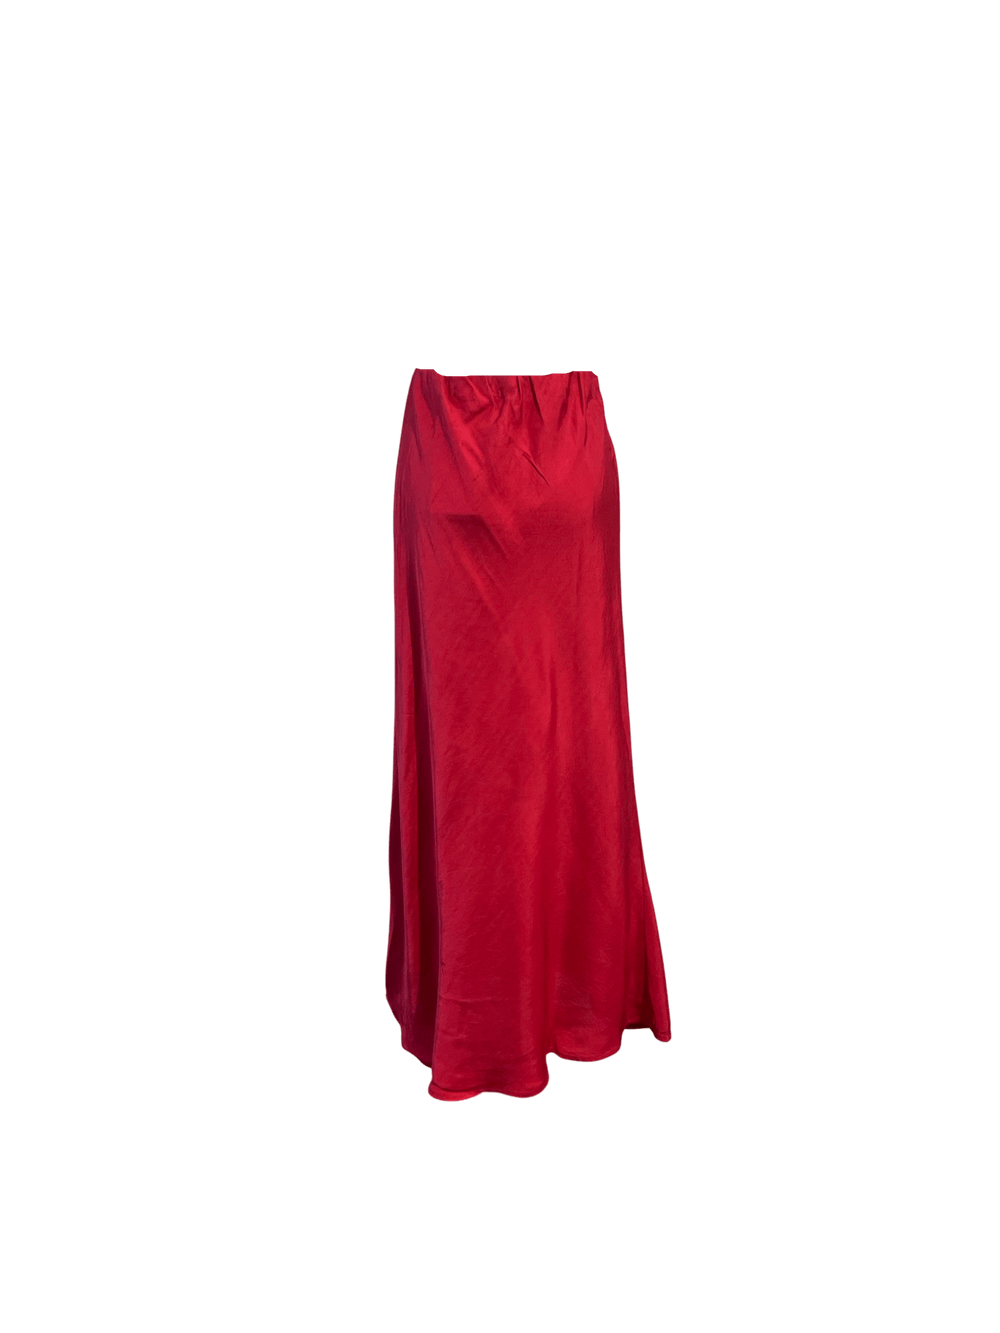 Sateside Apparel Stateside | Viscose Satin Midi Skirt in Berry